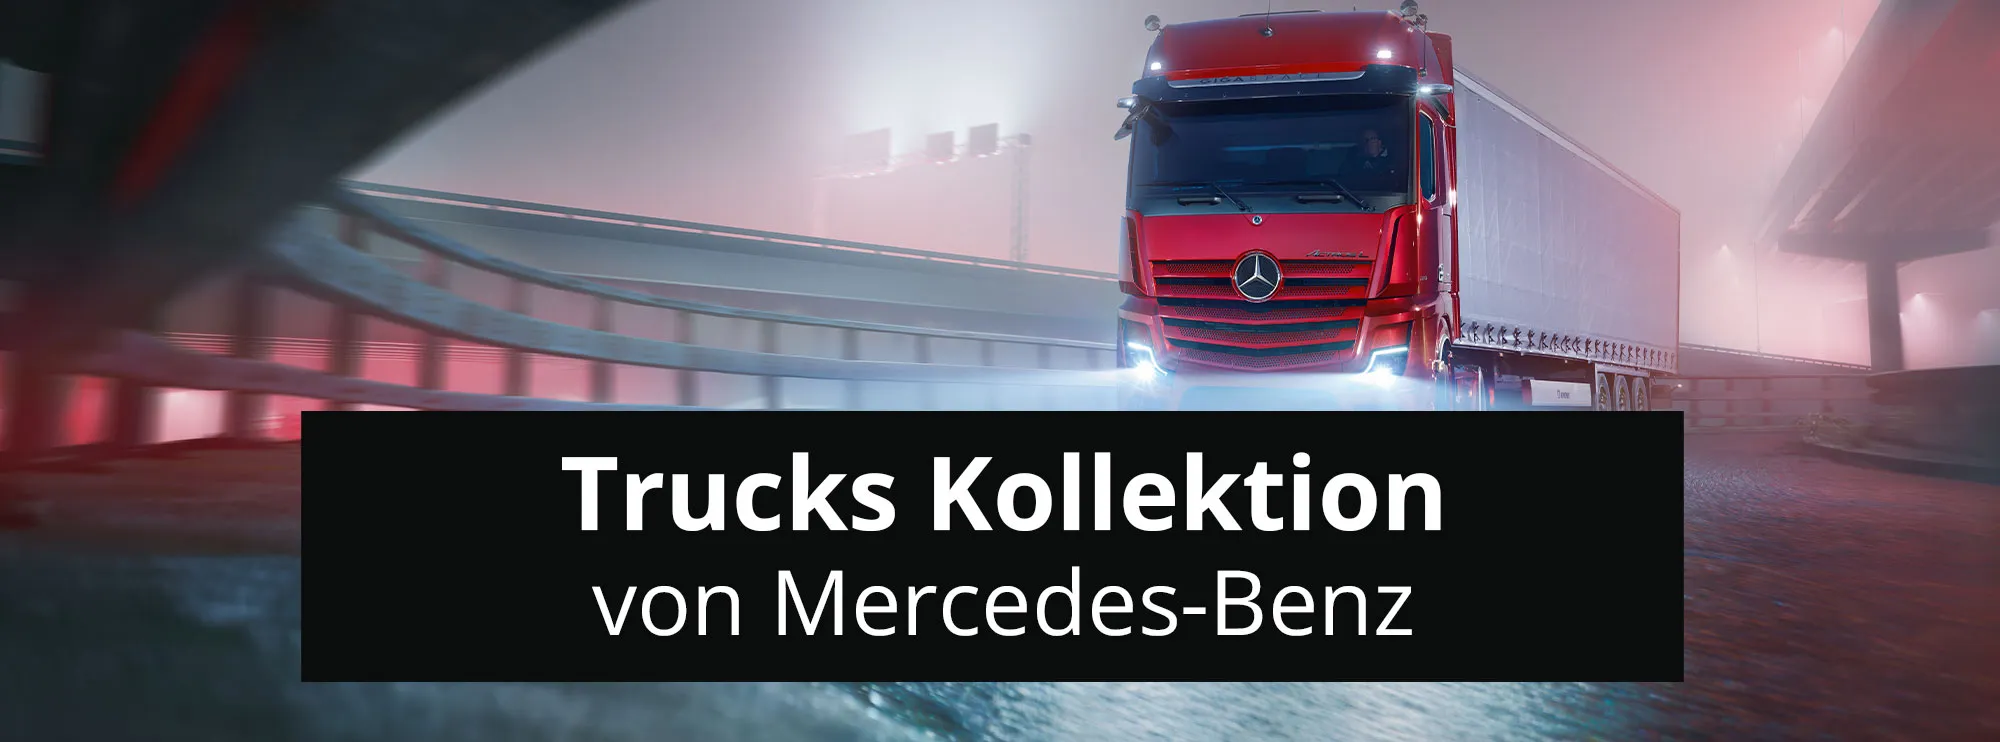 Mercedes benz  trucks kollektion rosier online shop header